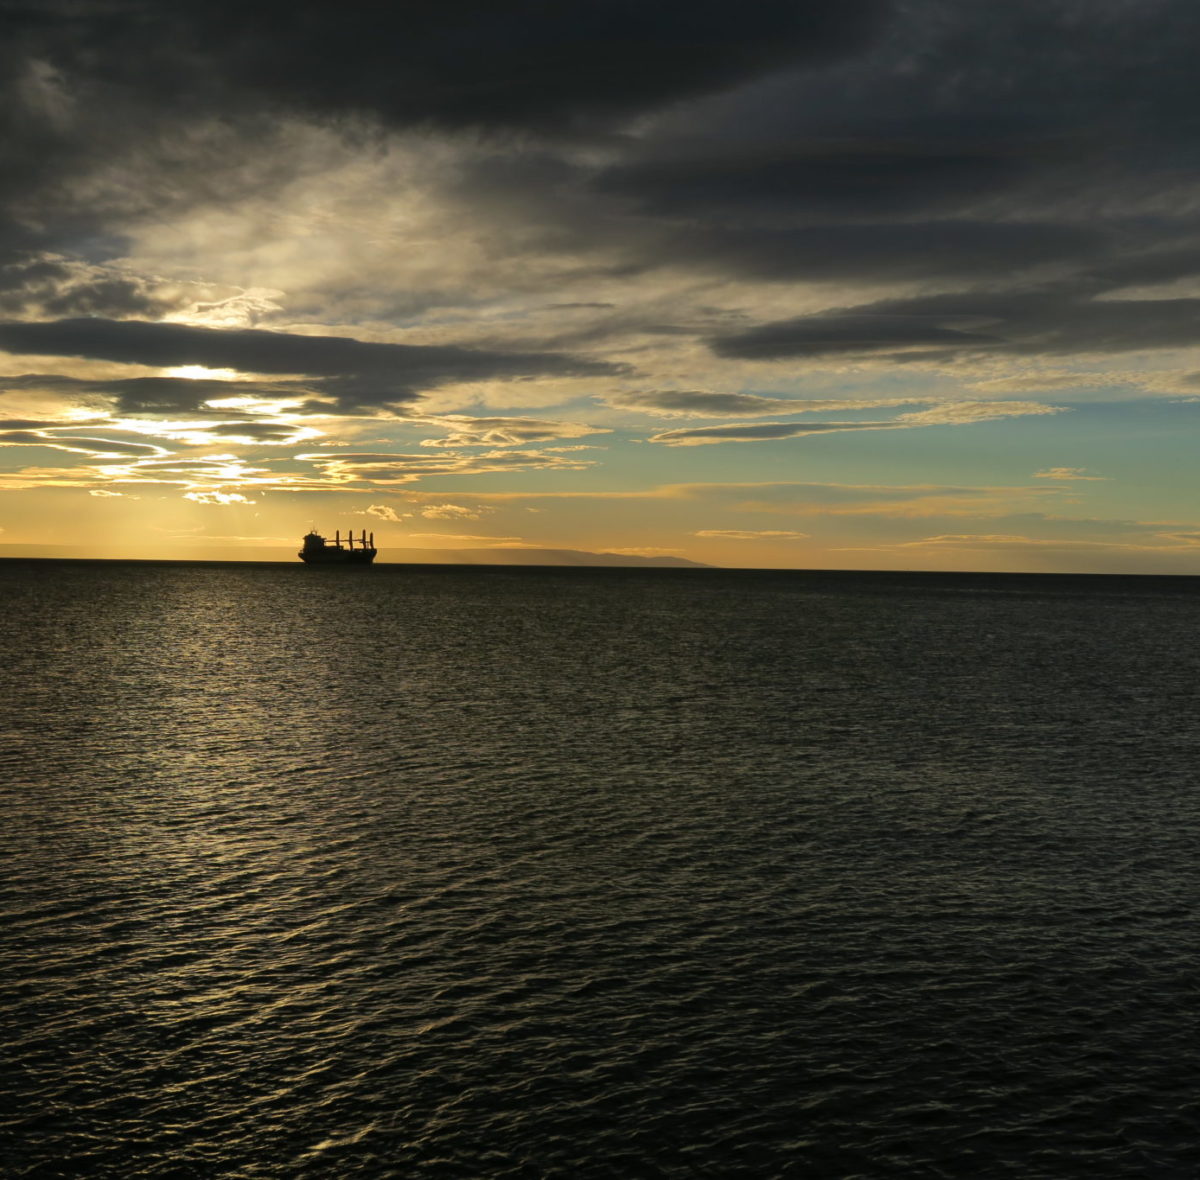 Lo stretto di Magellano da Punta Arenas /Magellan Straits seen from Punta Arenas